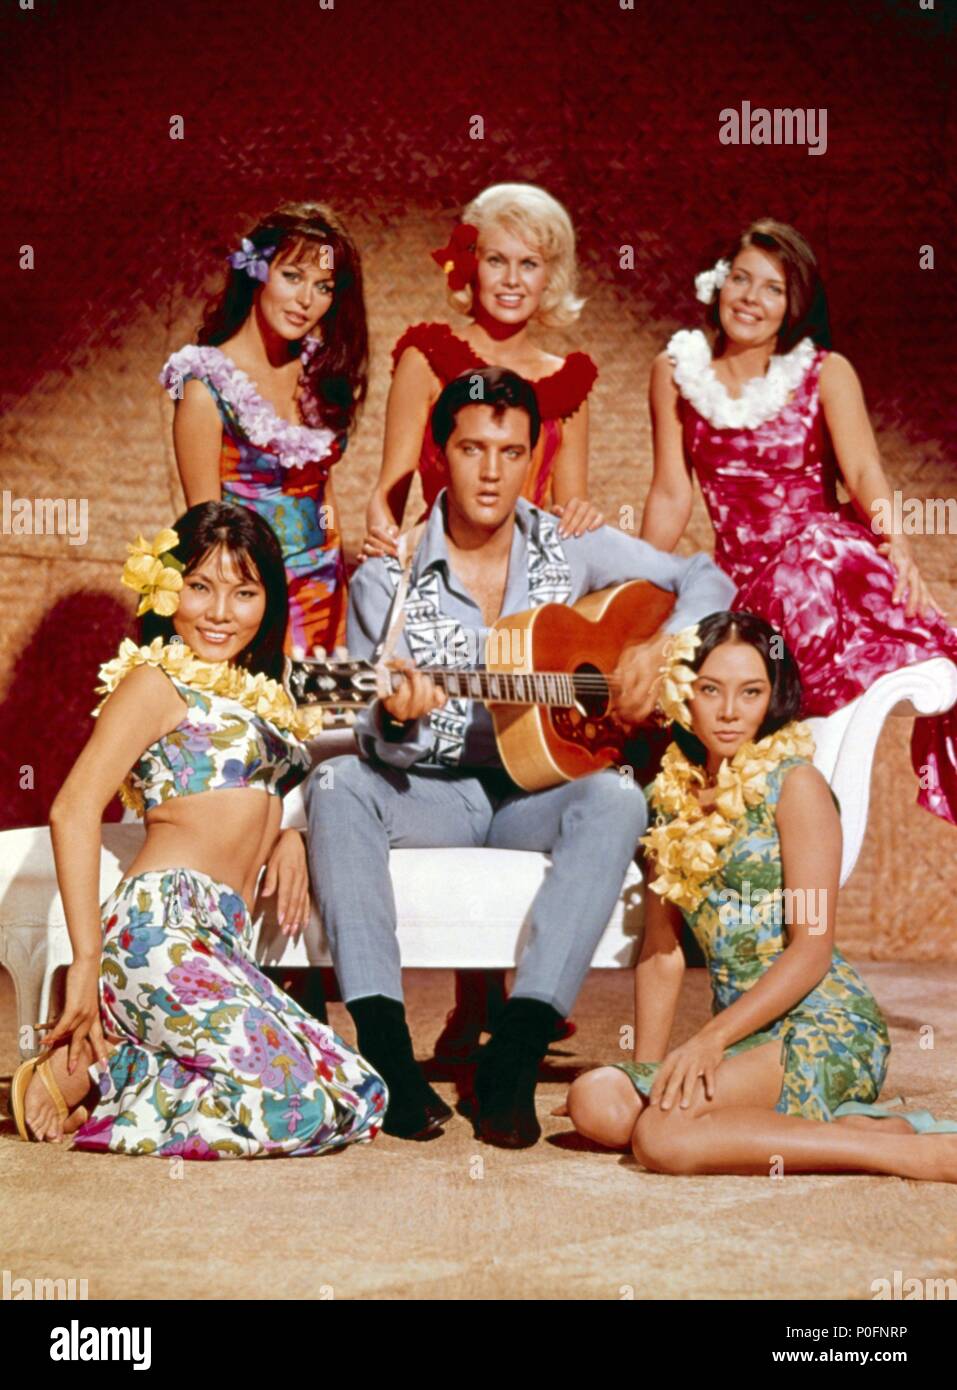 Original Film Titel: Paradise, Hawaiian style. Englischer Titel: Paradise, Hawaiian style. Regisseur: Michael Moore. Jahr: 1966. Stars: ELVIS PRESLEY. Quelle: Paramount Pictures/Album Stockfoto